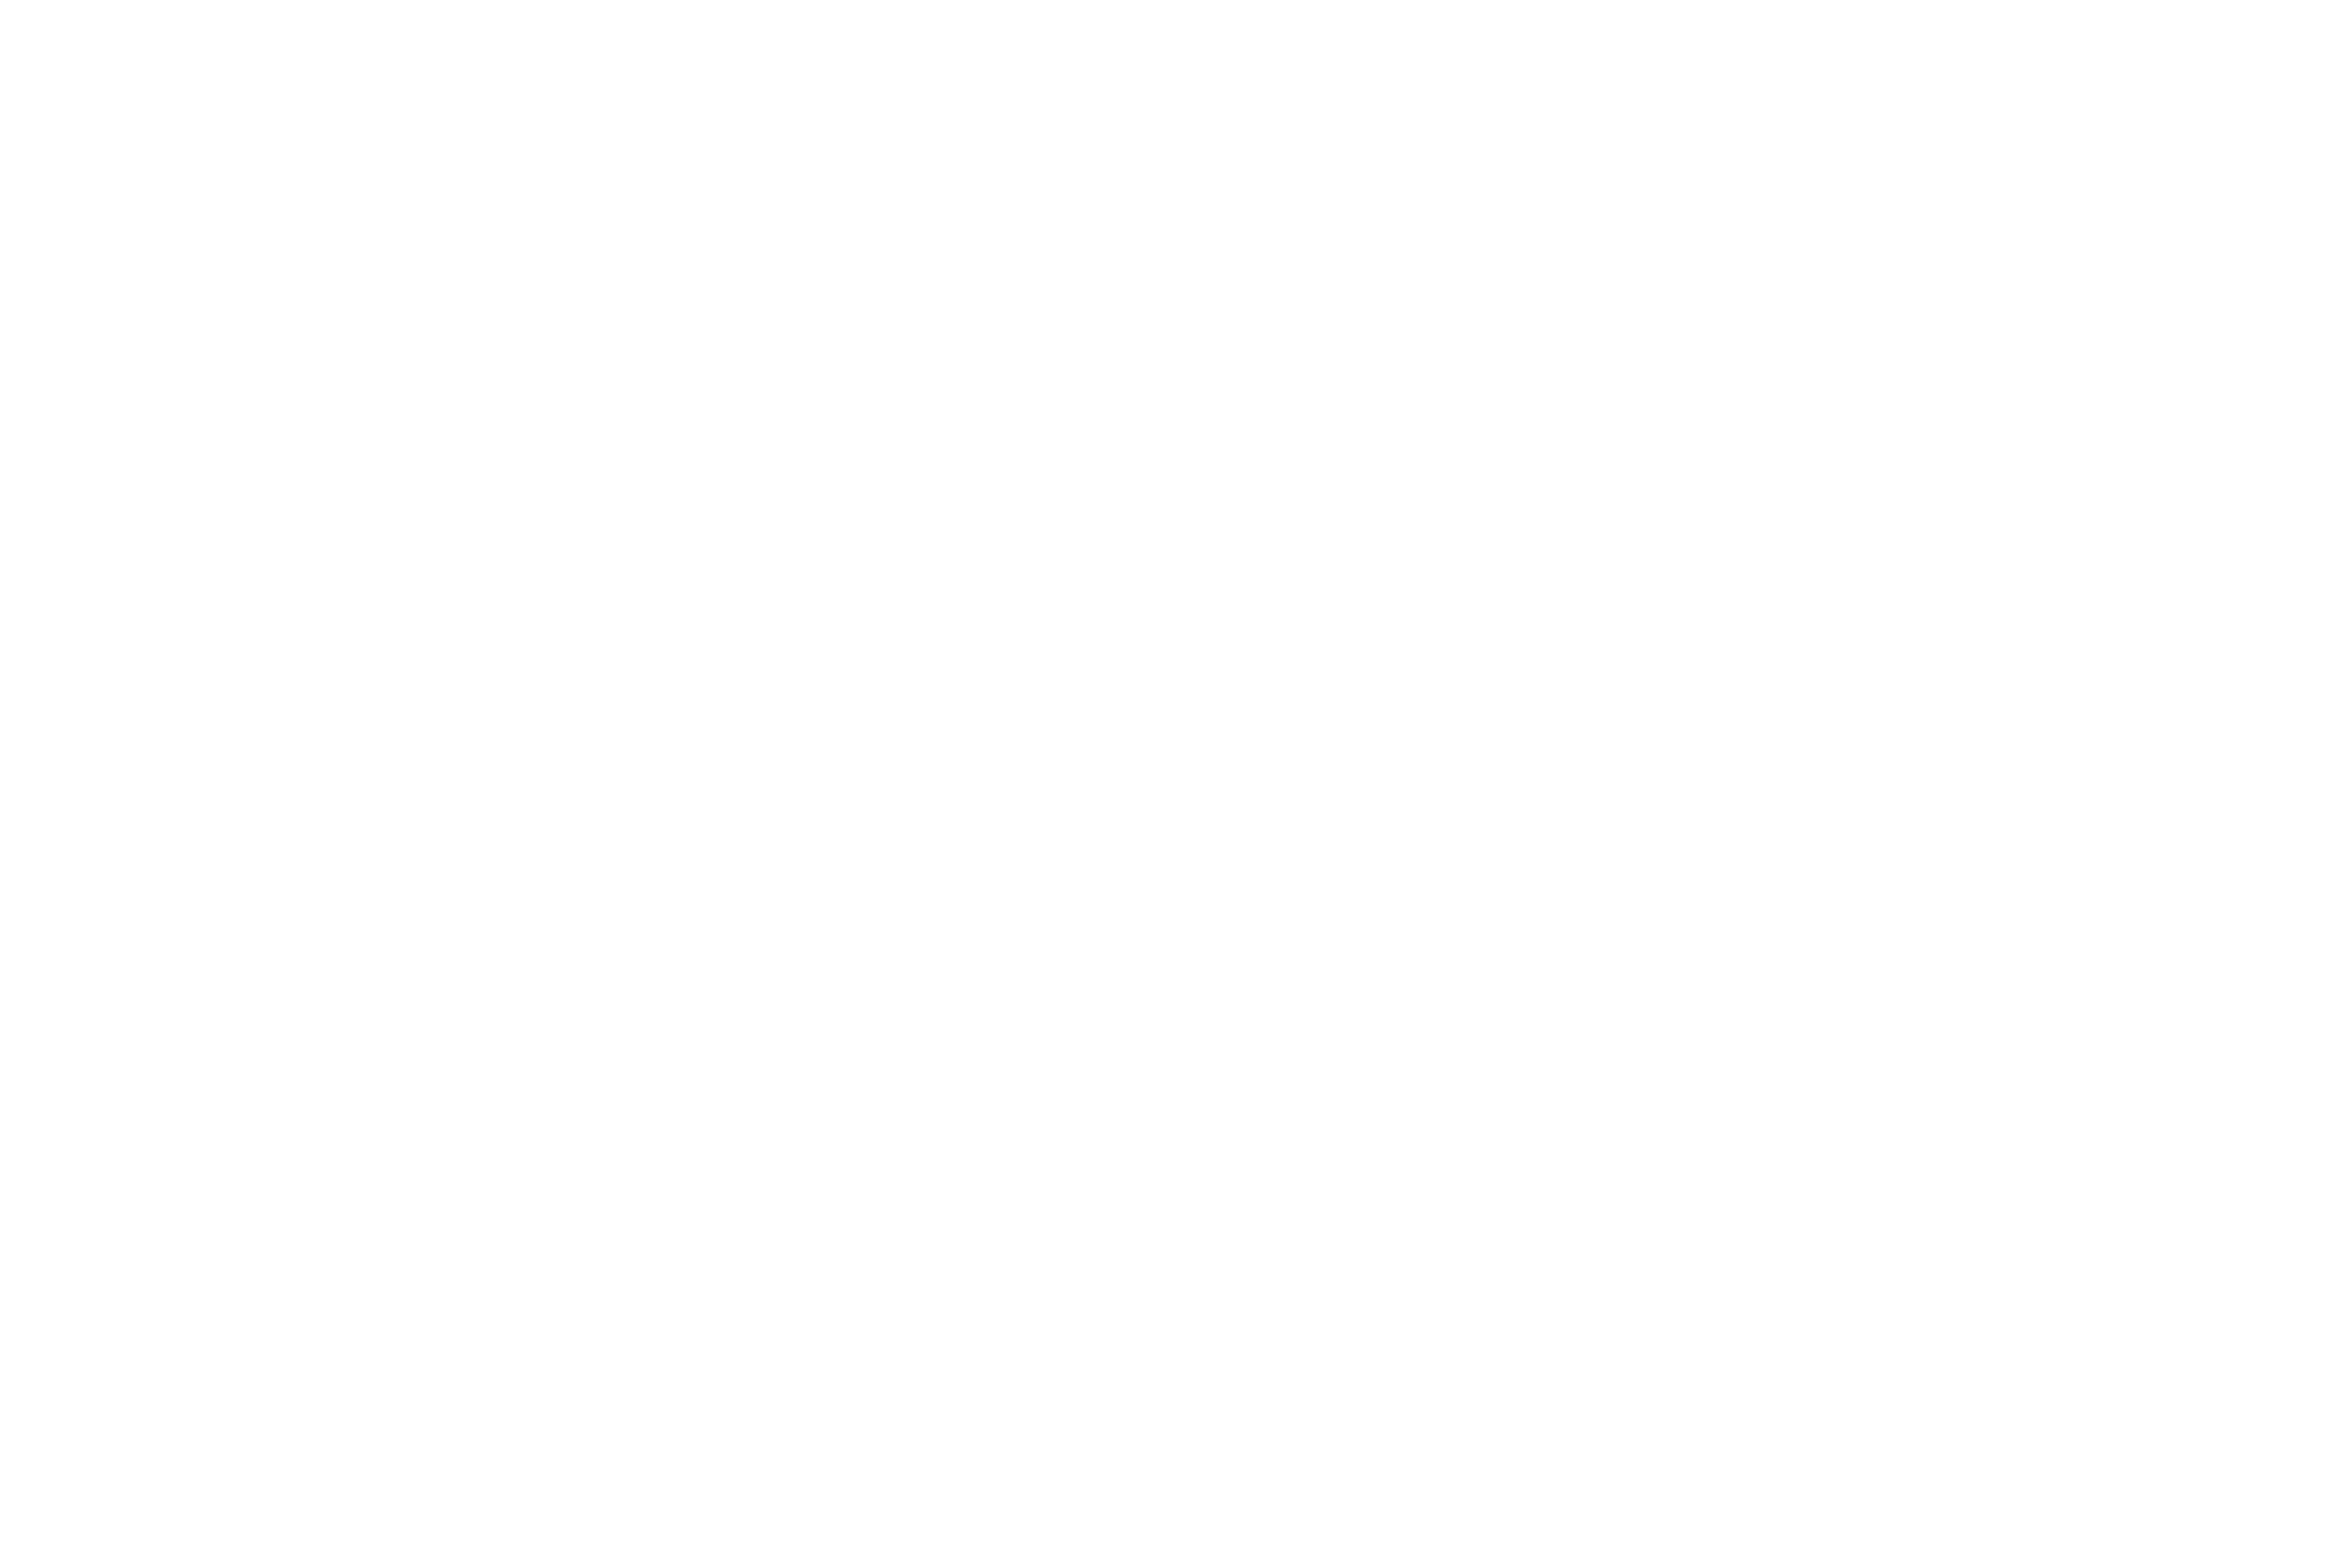 WeWork-Logo.wine